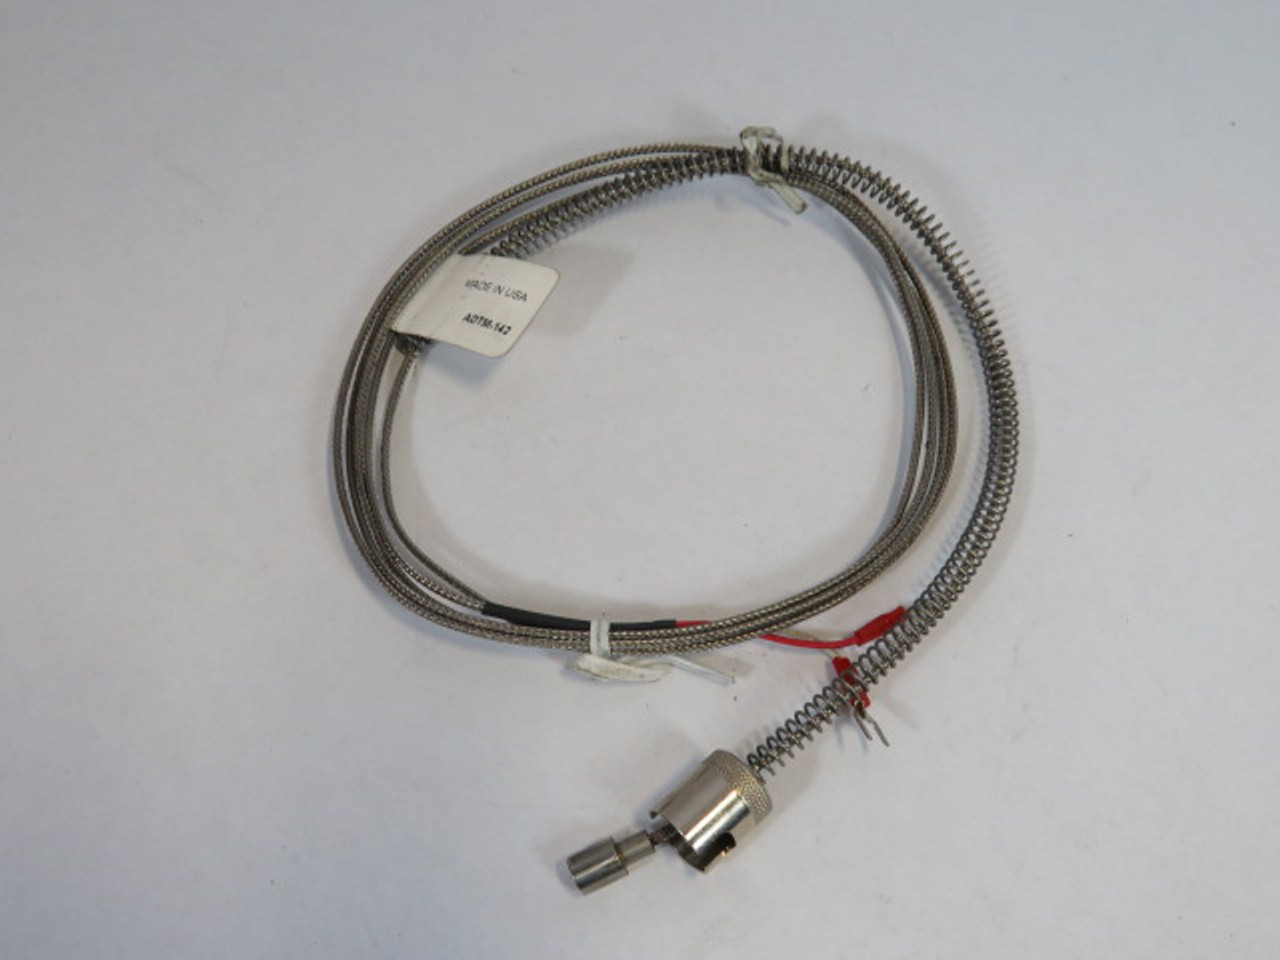 Plastic Process Equipment ADTM-142 Temperature Control Probe w/Cable USED